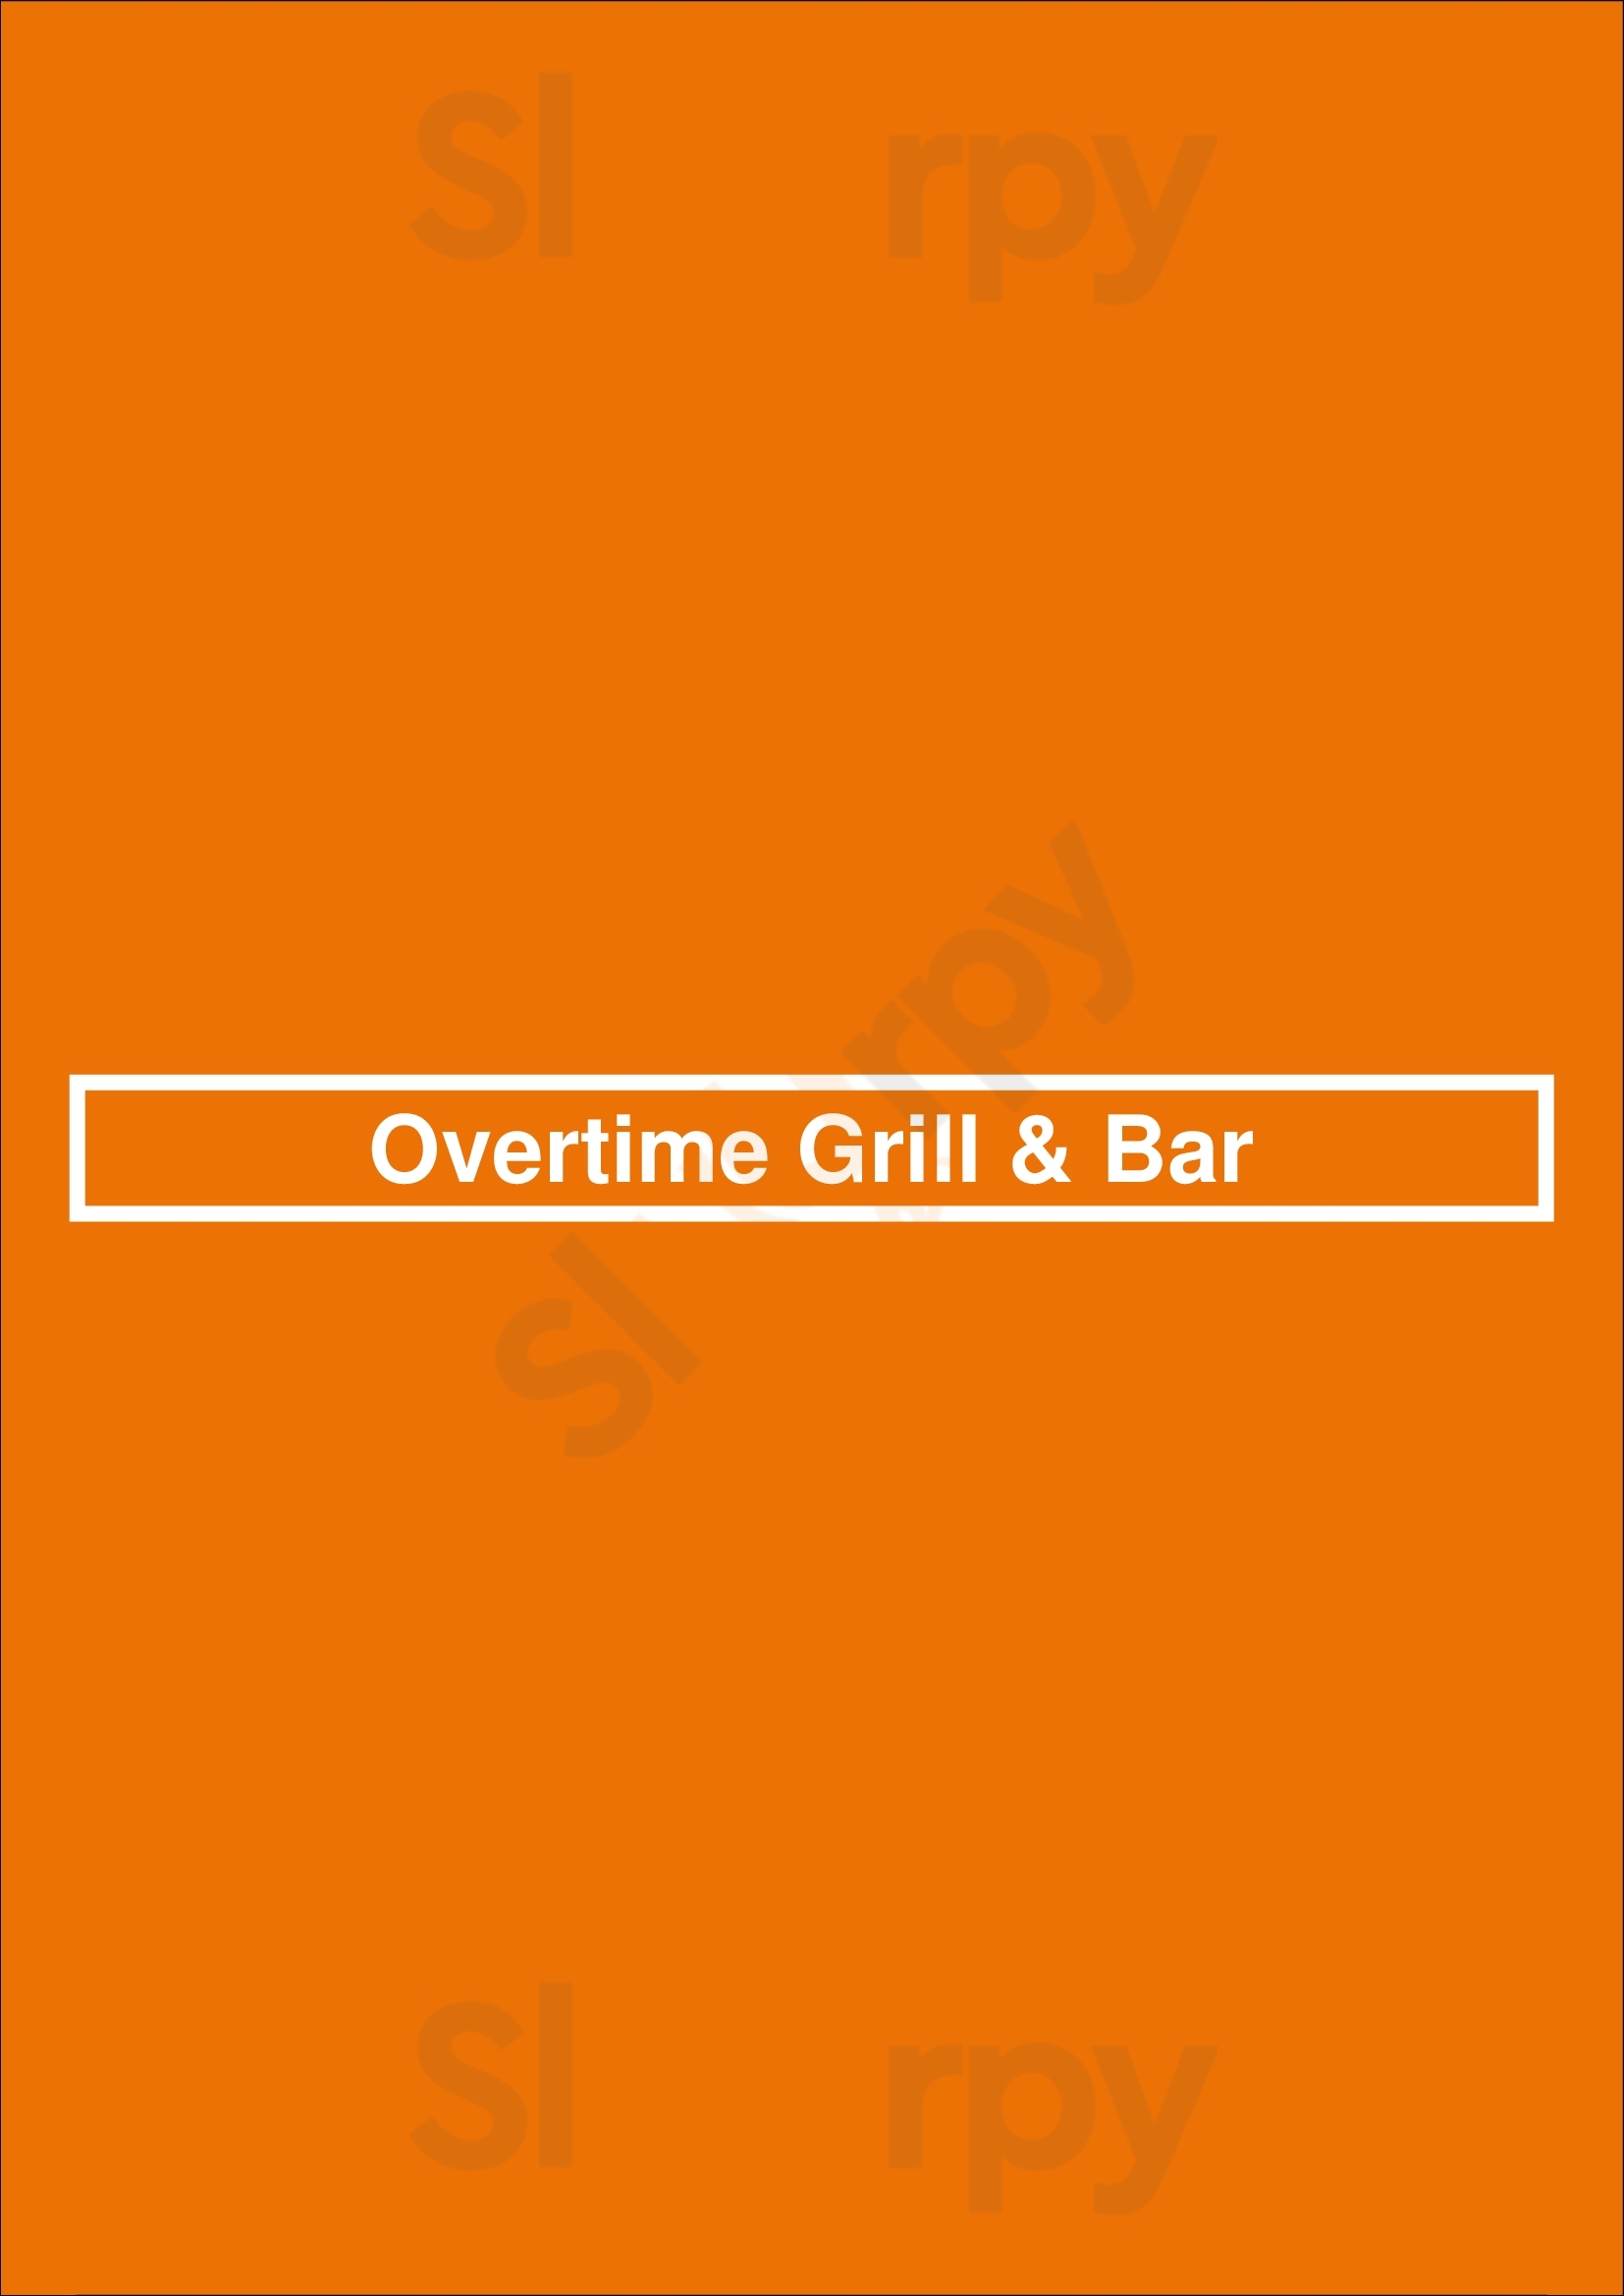 Overtime Grill & Bar Birmingham Menu - 1